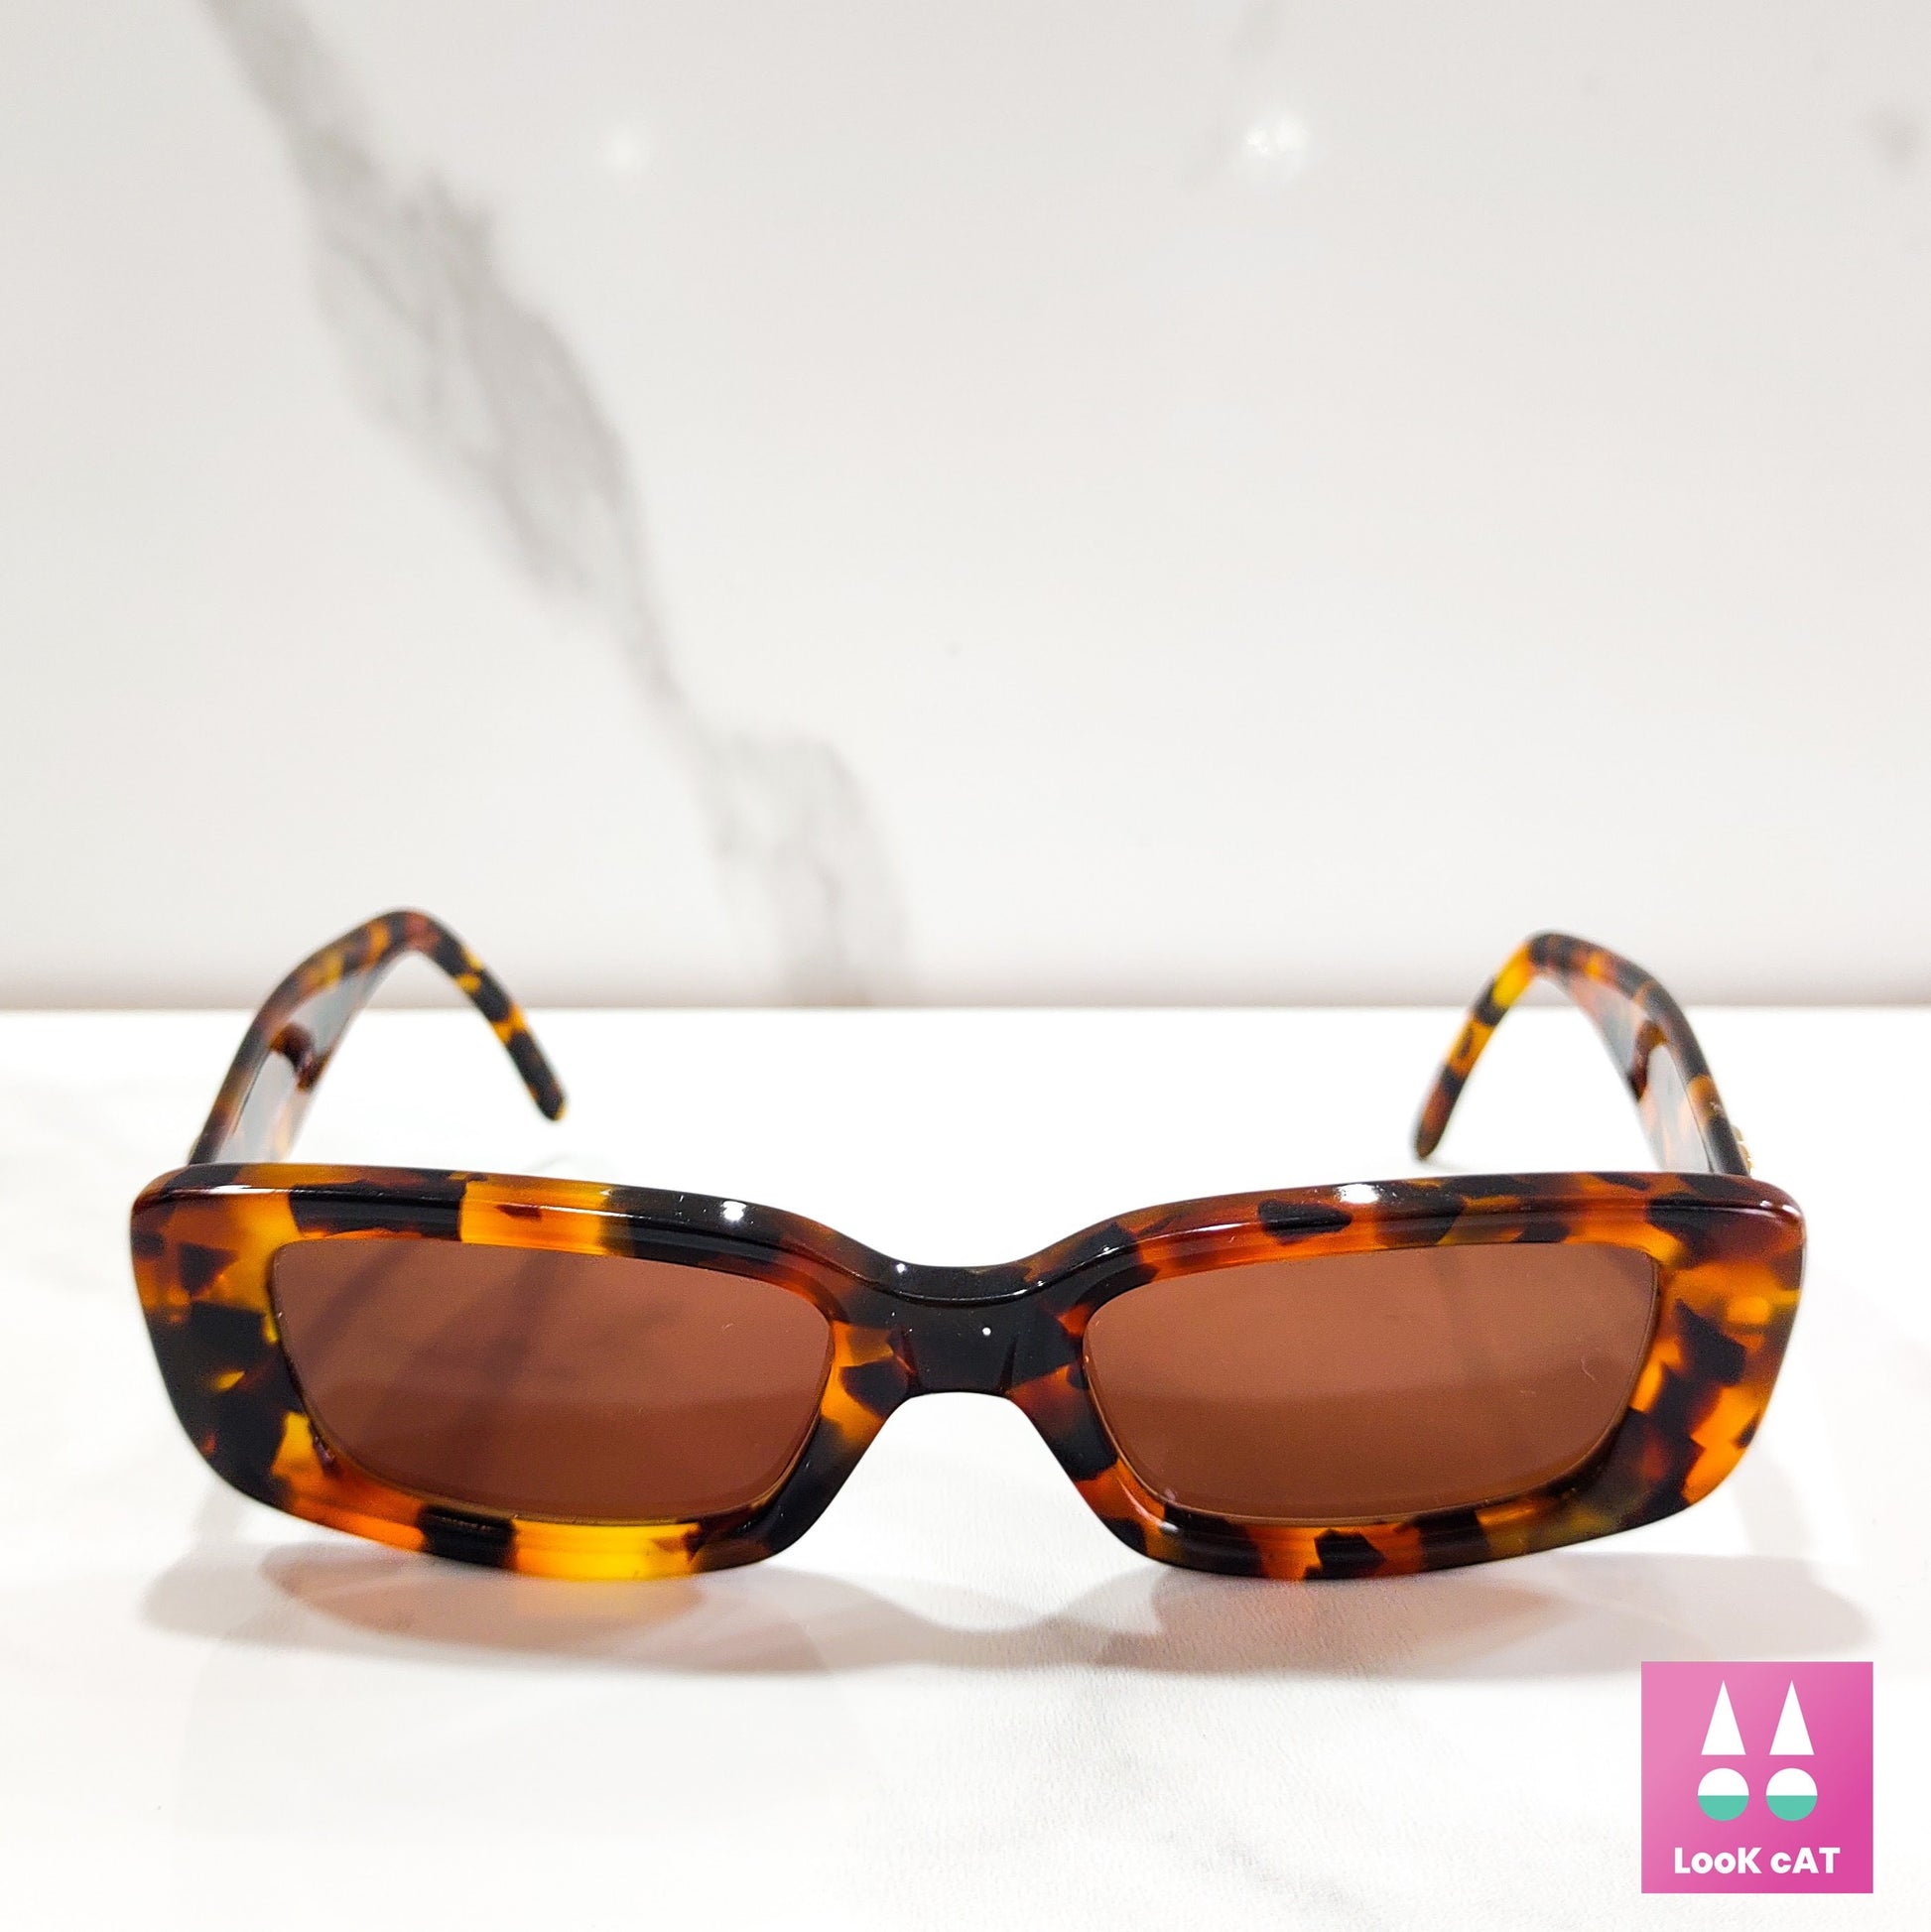 Gucci - Rectangular Sunglasses with GG - Tortoiseshell - Gucci